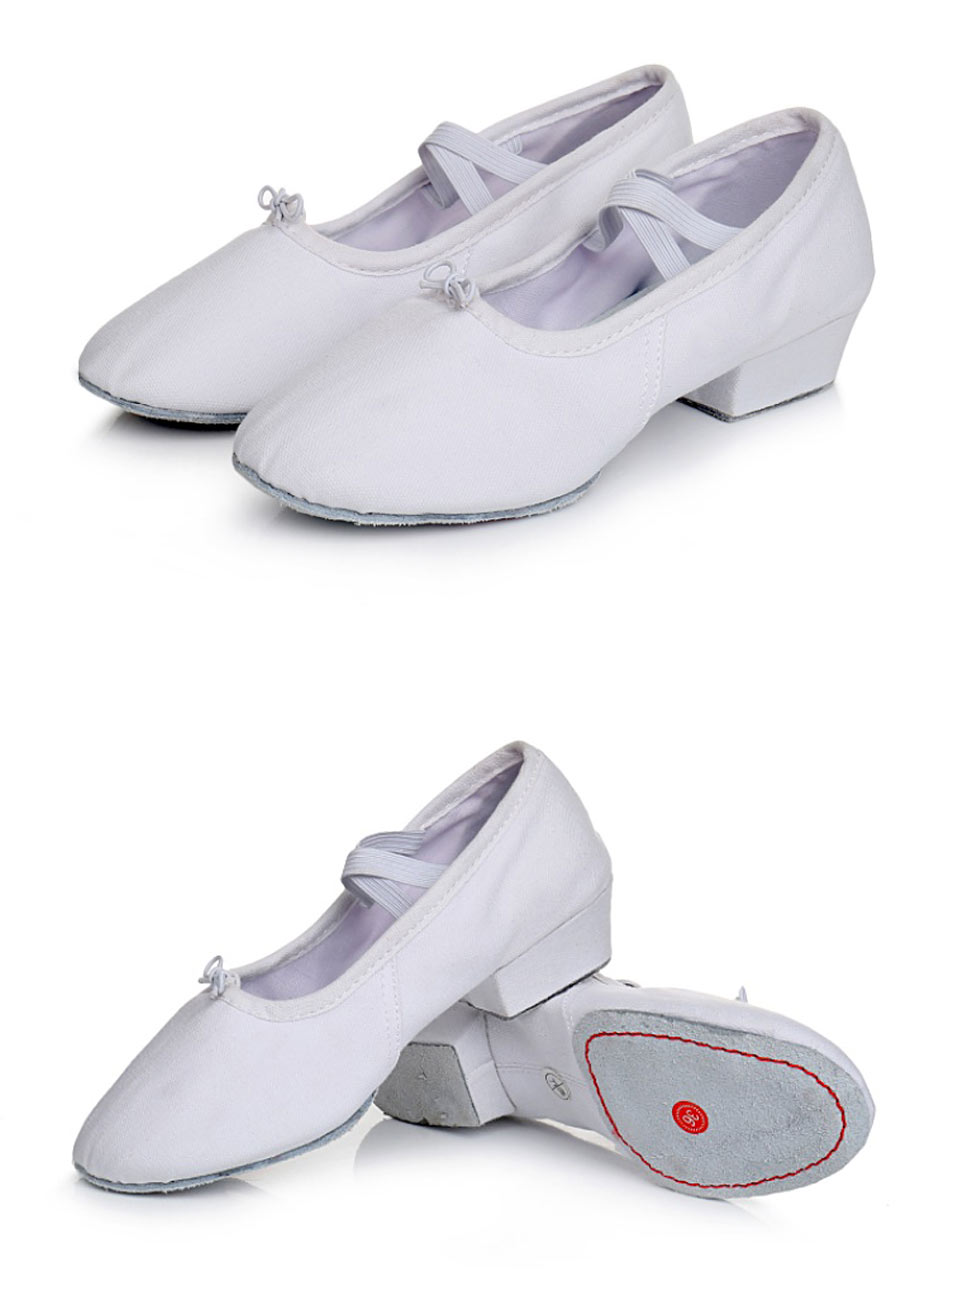 come4buy.com-Women Dance Shoes Girls Ballet Jazz Salsa Shoes